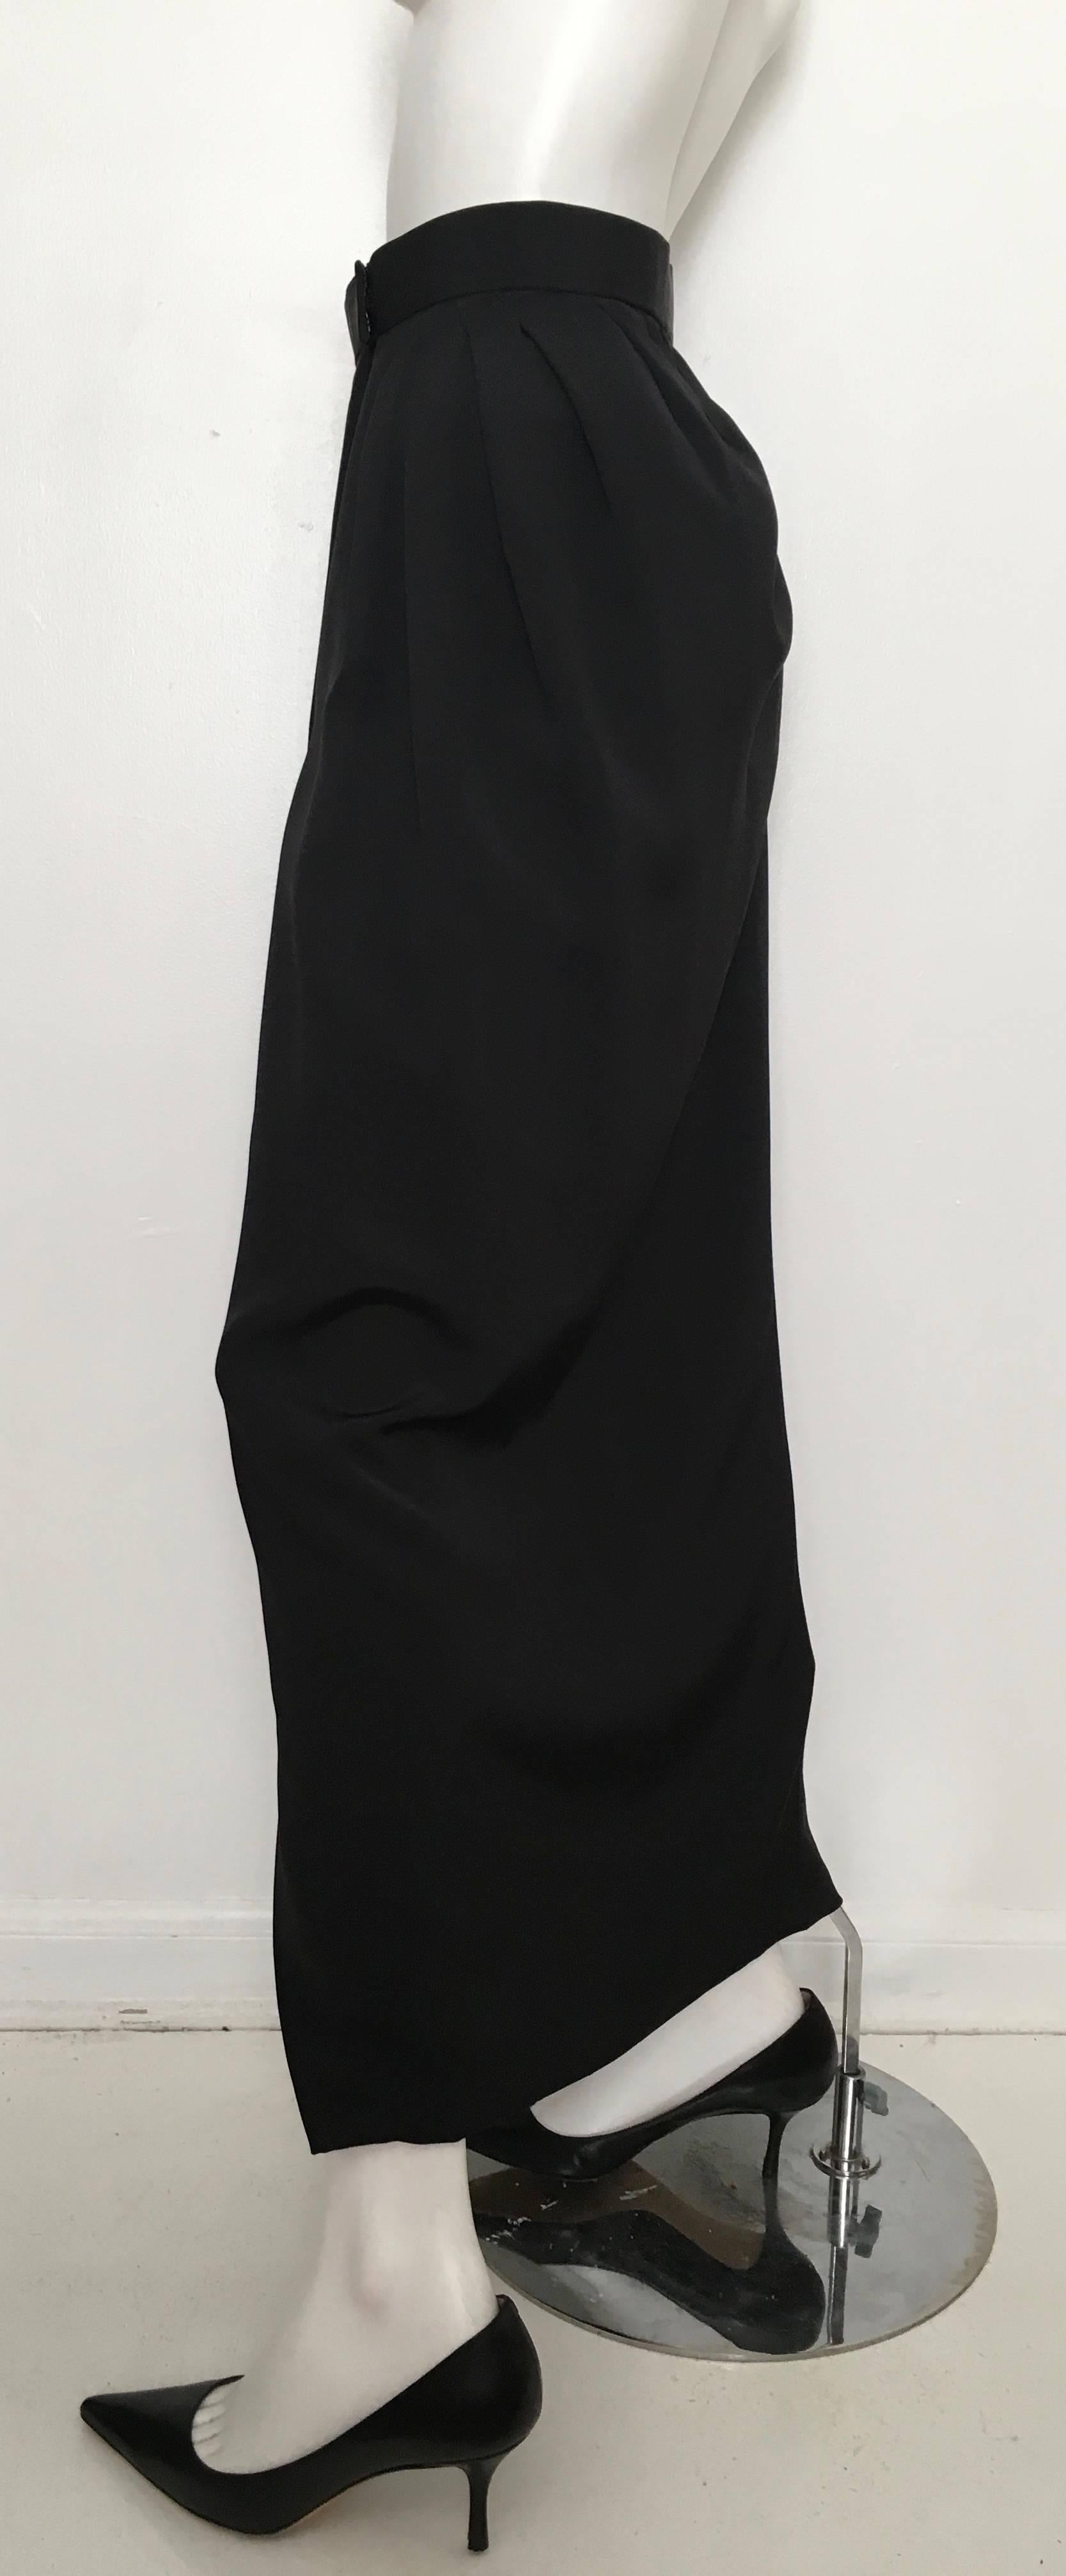 Women's or Men's Carolyne Roehm Black Long Evening Wrap Skirt Size 4. For Sale